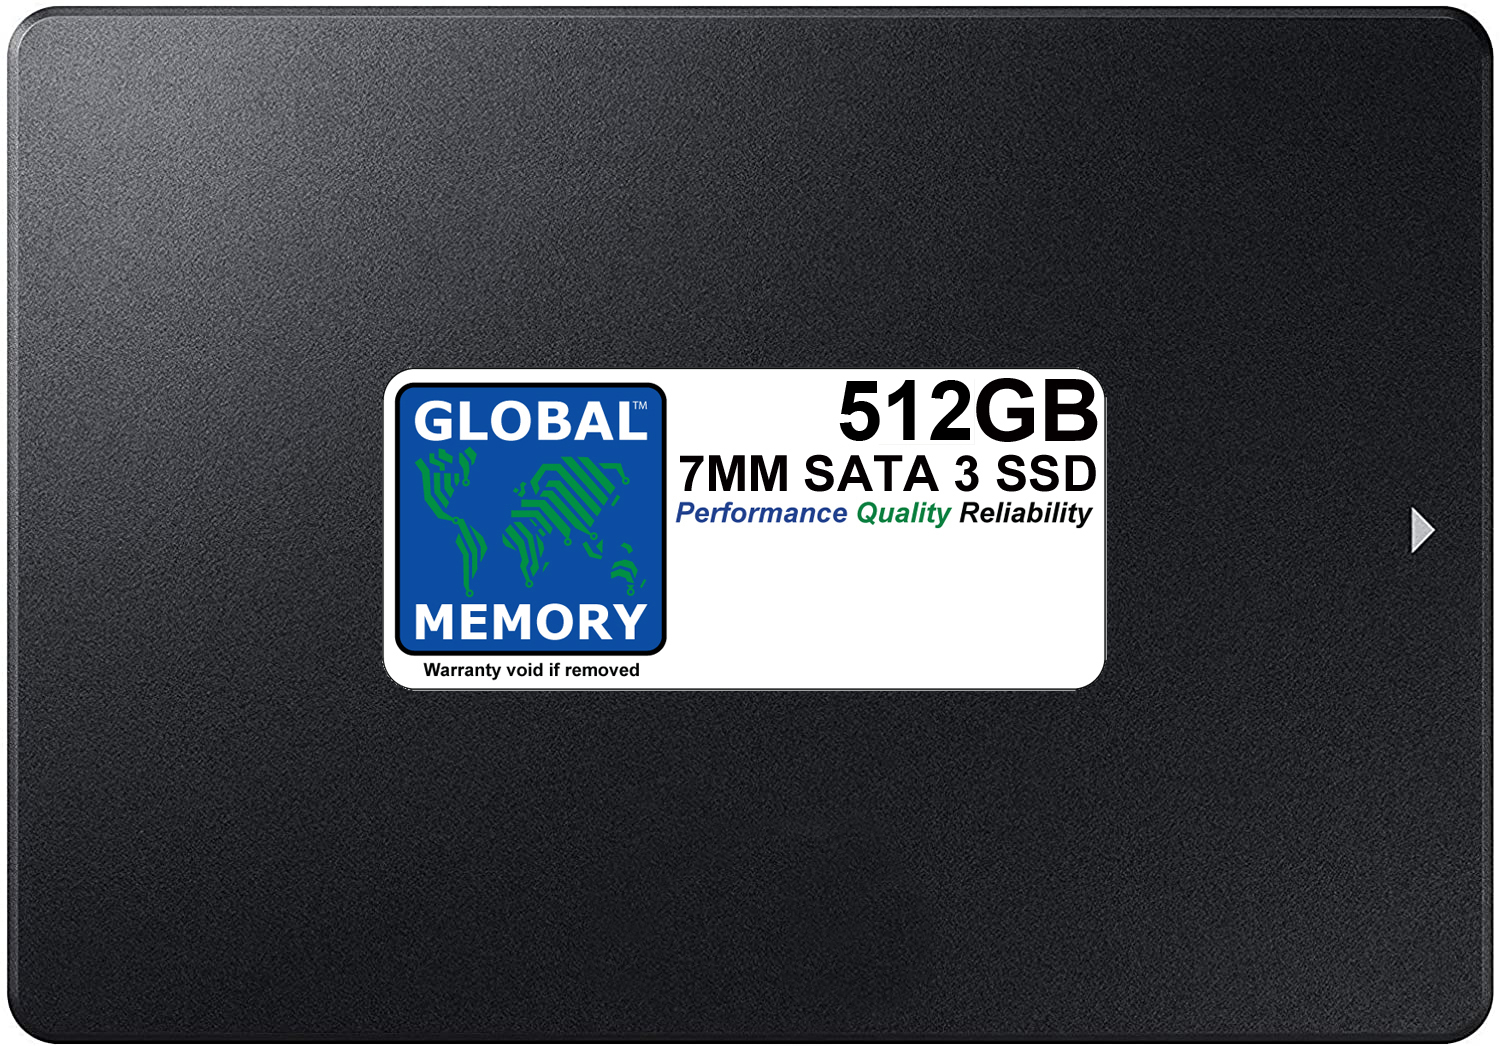 512GB 7mm 2.5" SATA 3 SSD FOR LAPTOPS / DESKTOP PCs / SERVERS / WORKSTATIONS